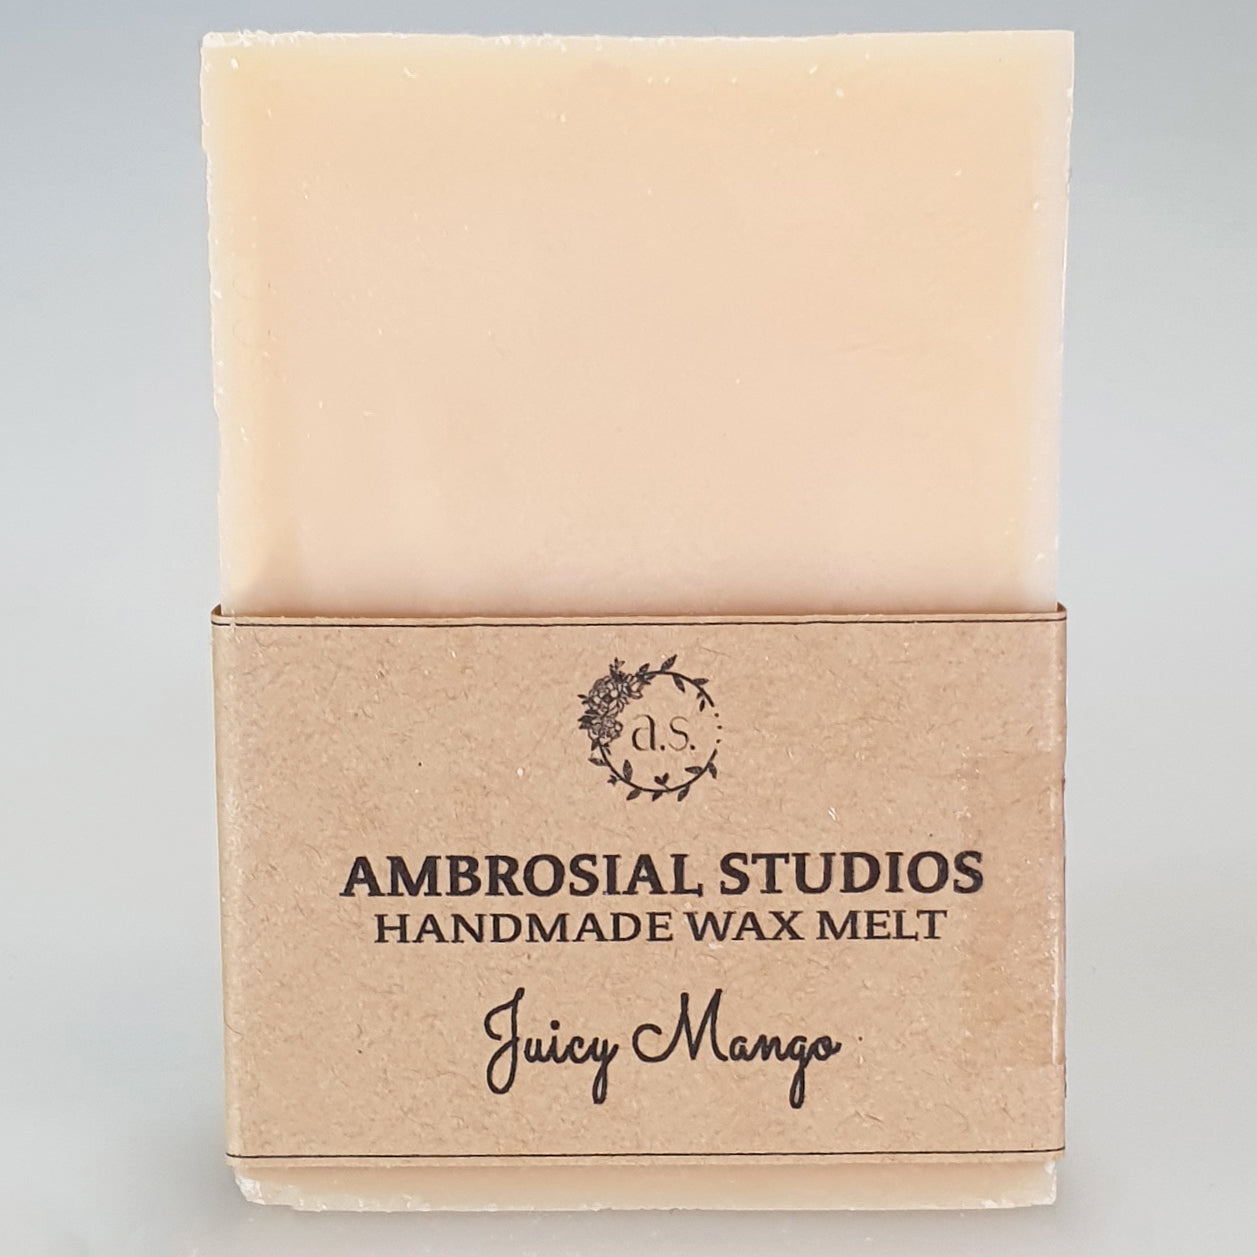 Ambrosial Studios - Handmade Wax Melt - Juicy Mango